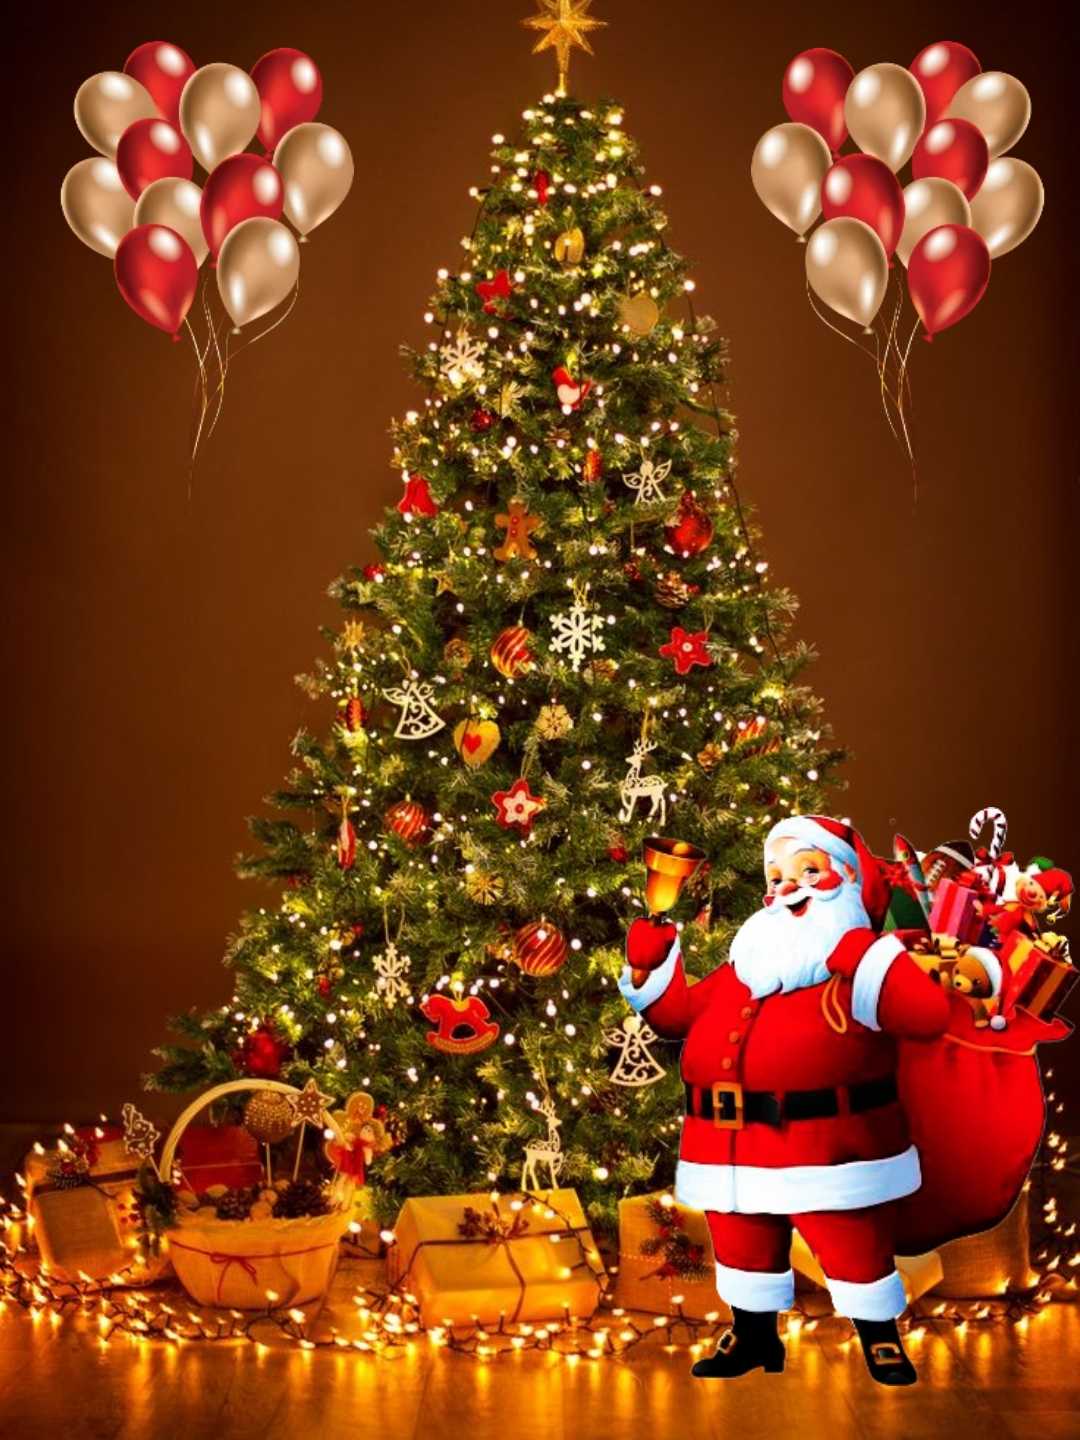 Santa Clouse Editing Background for Christmas